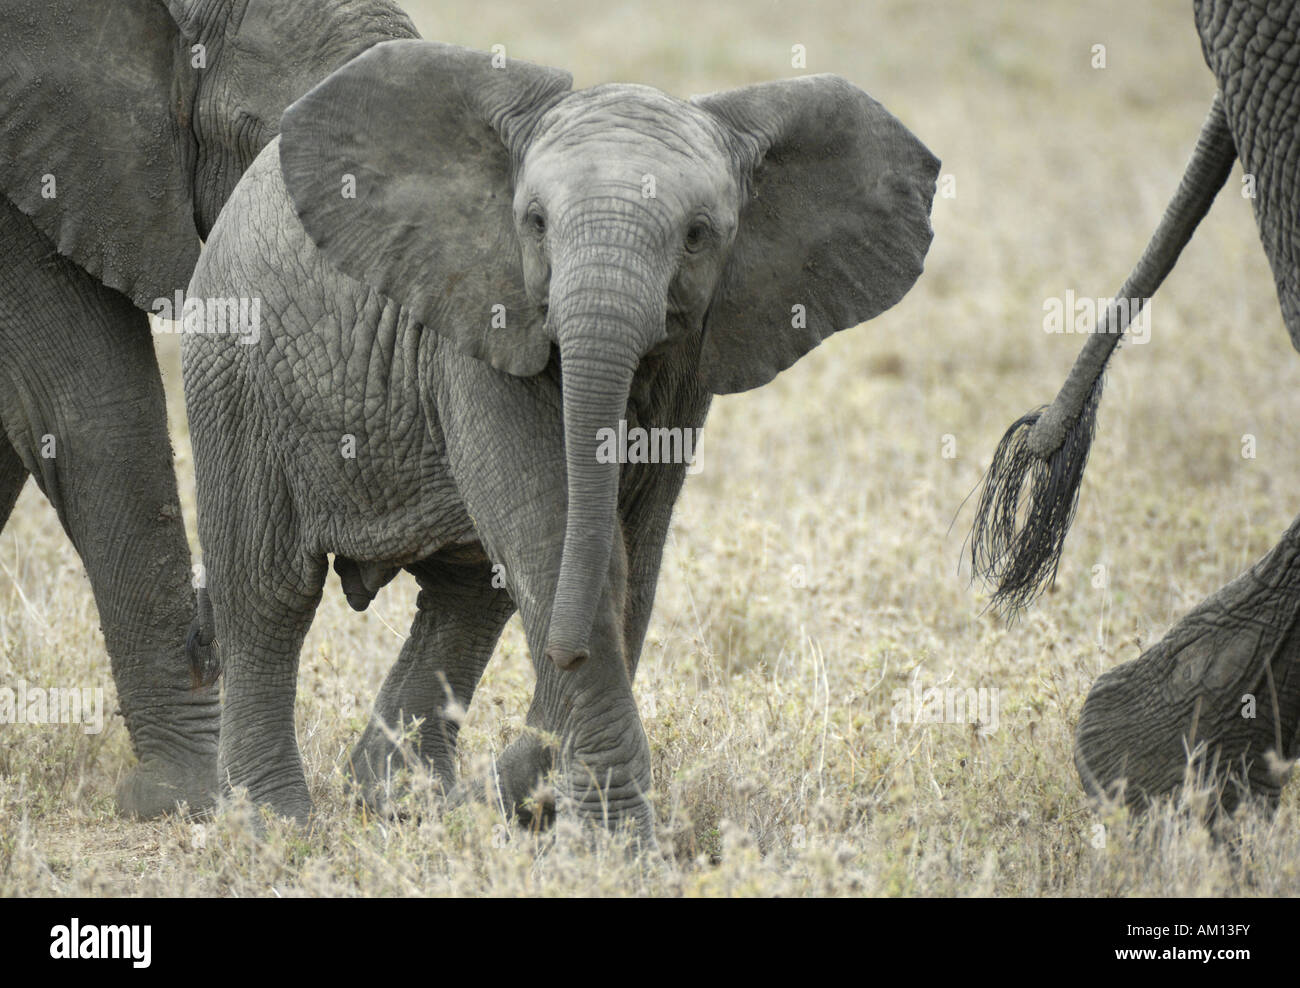 Bush africain Elephant (Loxodonta africana), balades bébé vache entre éléphants, Serengeti, Tanzanie Banque D'Images